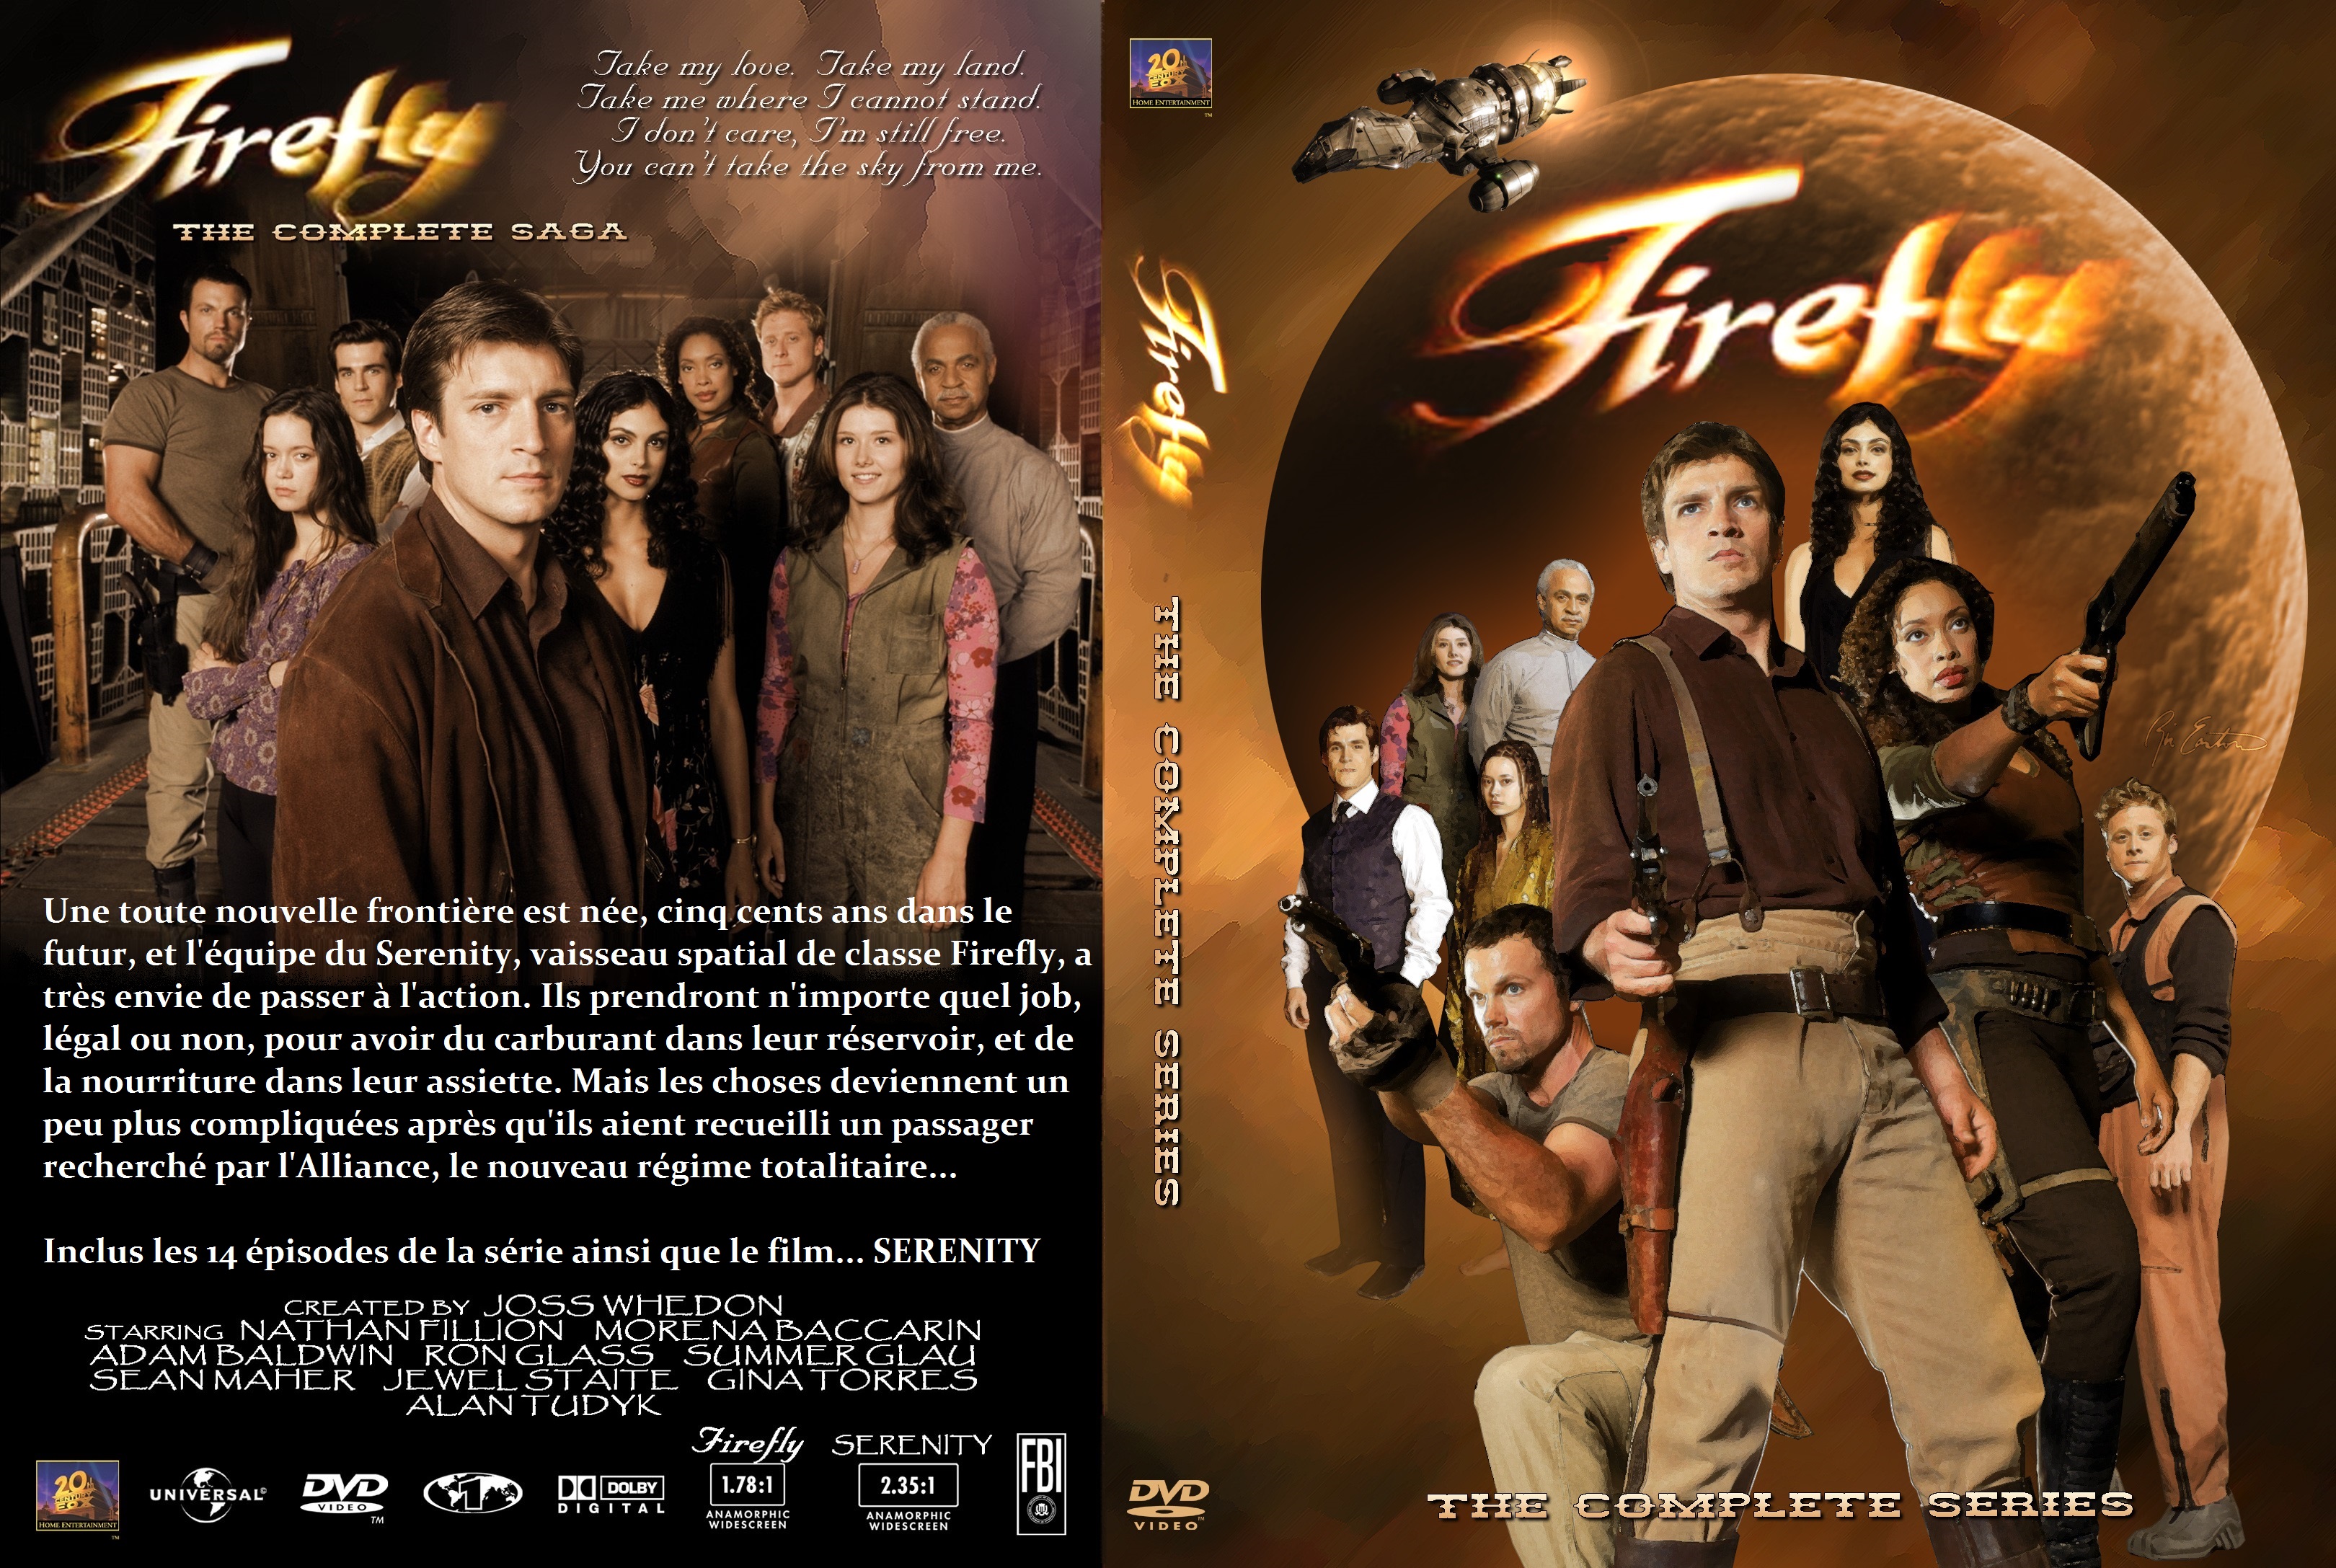 Jaquette DVD Firefly custom